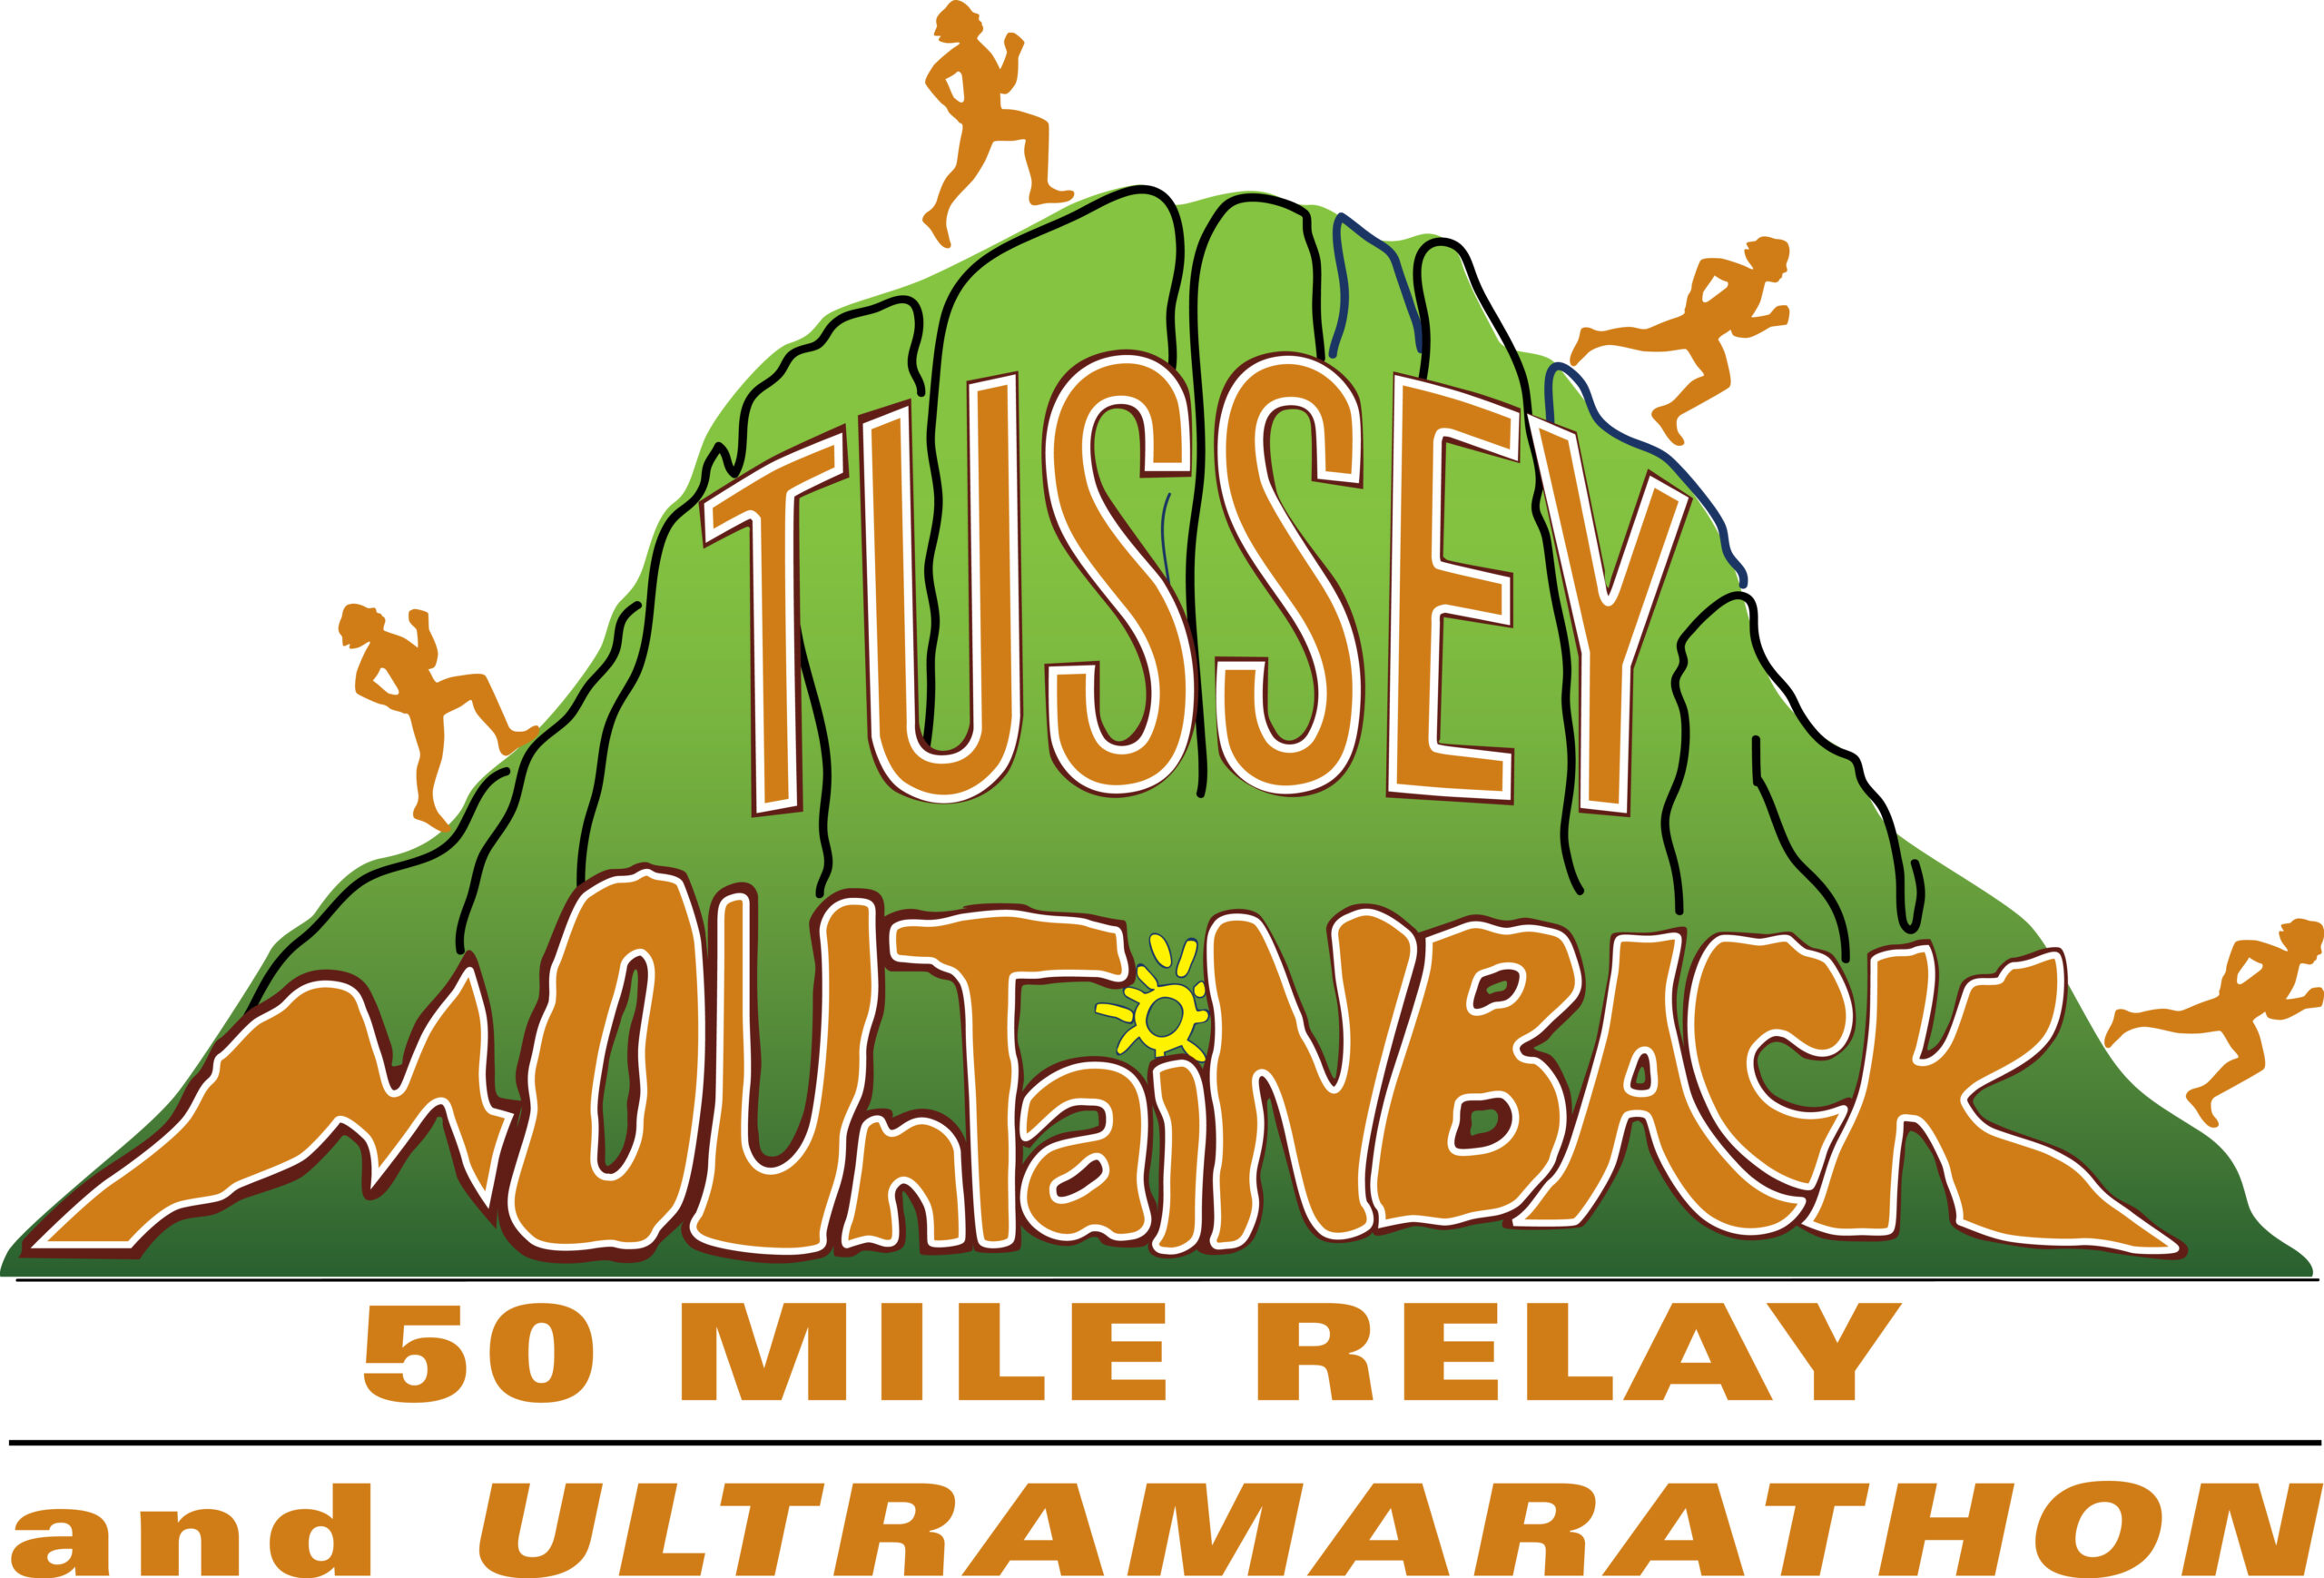 Tussey mOUnTaiNBACK 50 Mile Relay and Ultramarathon logo on RaceRaves